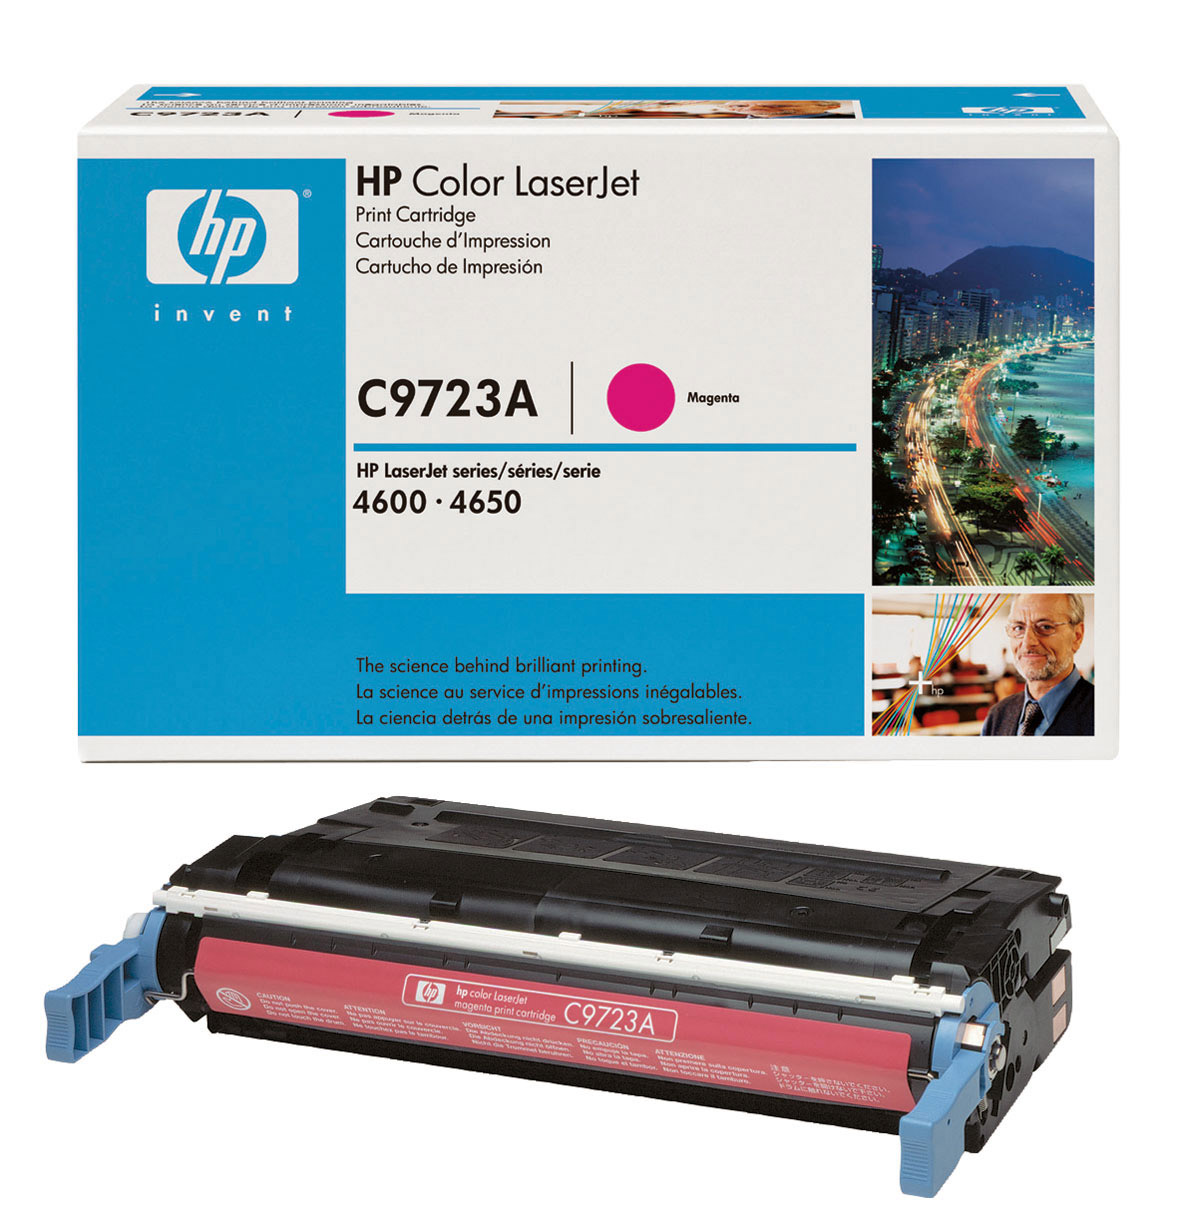 HP C9723A Magenta printer cartridge